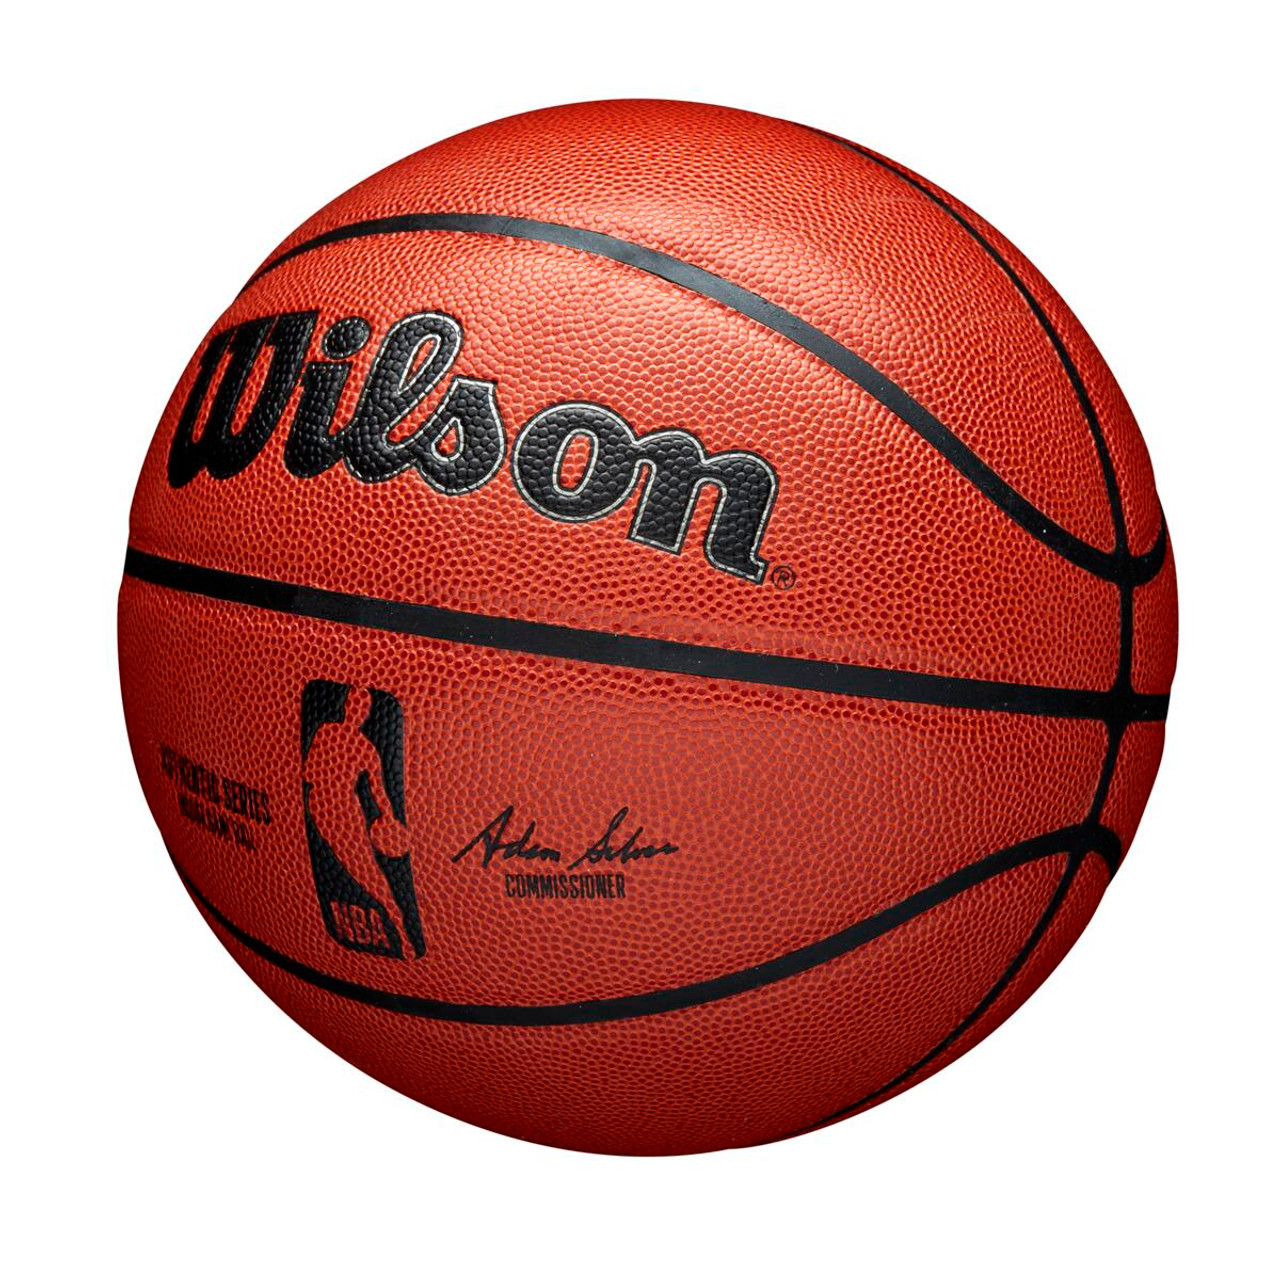 WILSON NBA AUTHENTIC REPLICA SERIES INDOOR BASKETBALL - Basketball Republic